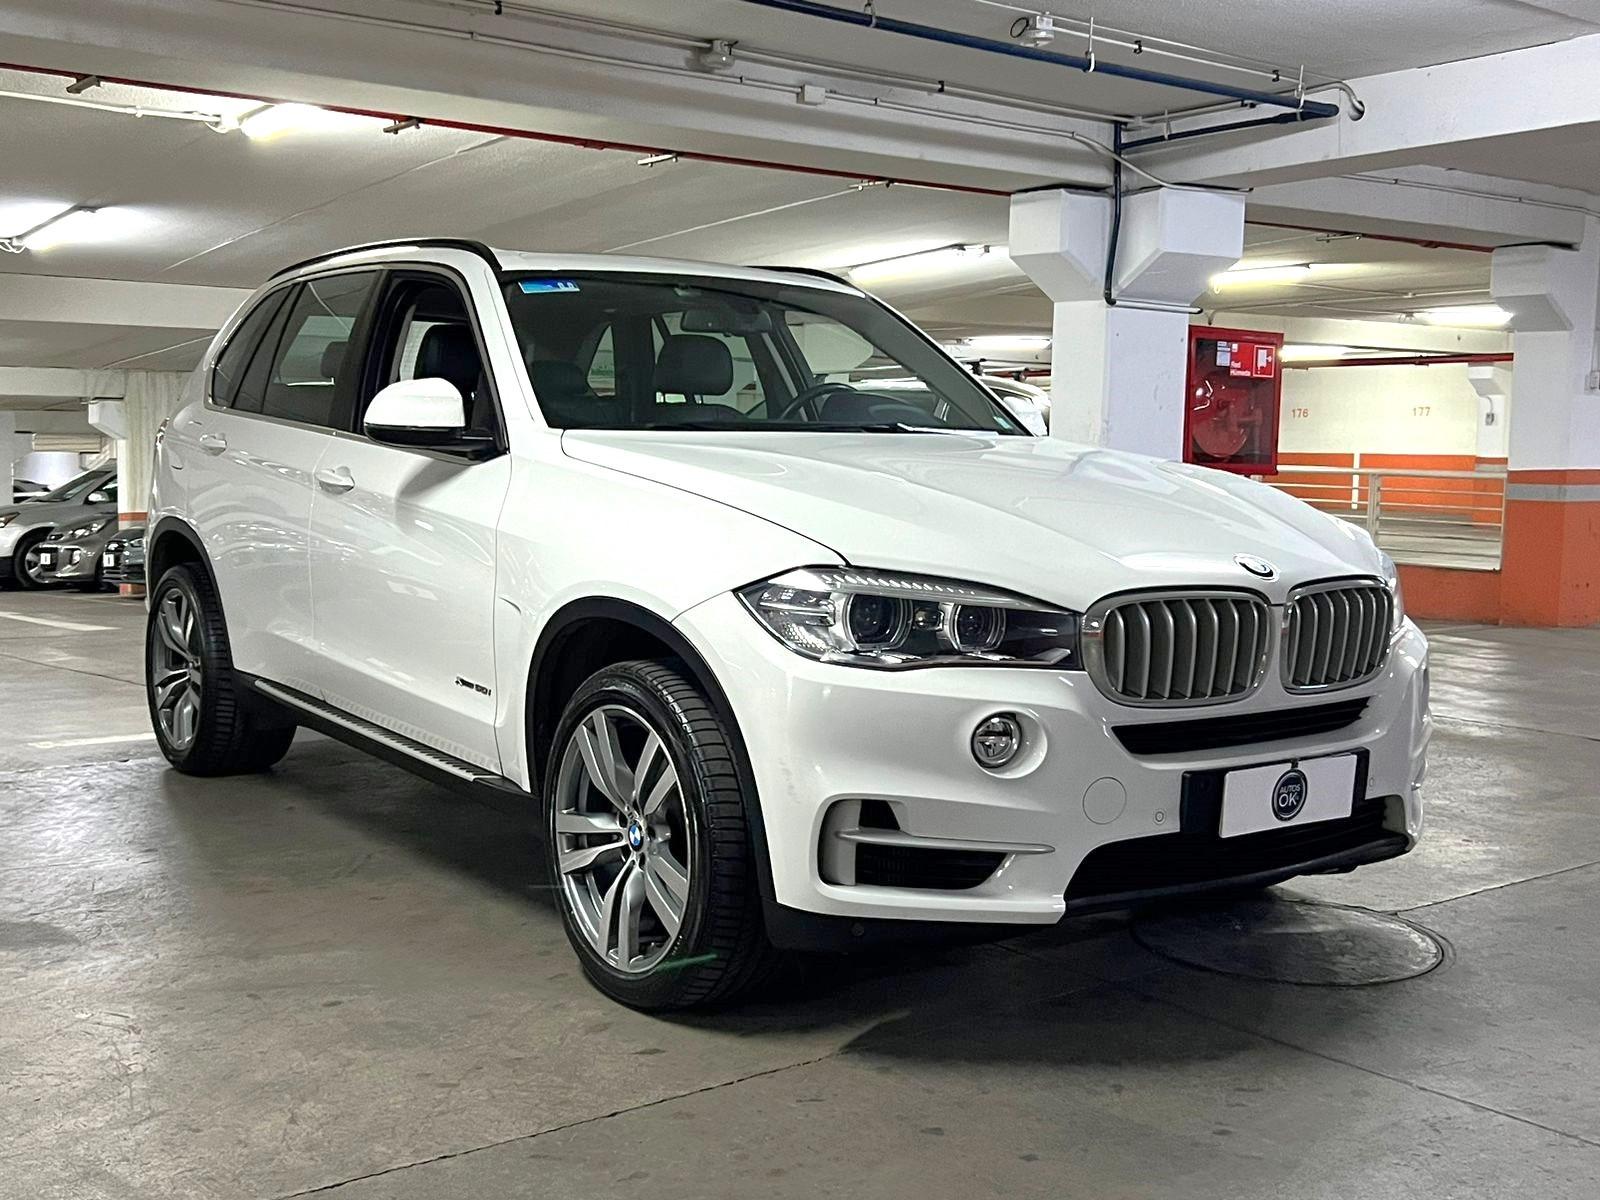 BMW X5 50i xDRIVE 2014 MANTENIMIENTO EN WBM - 